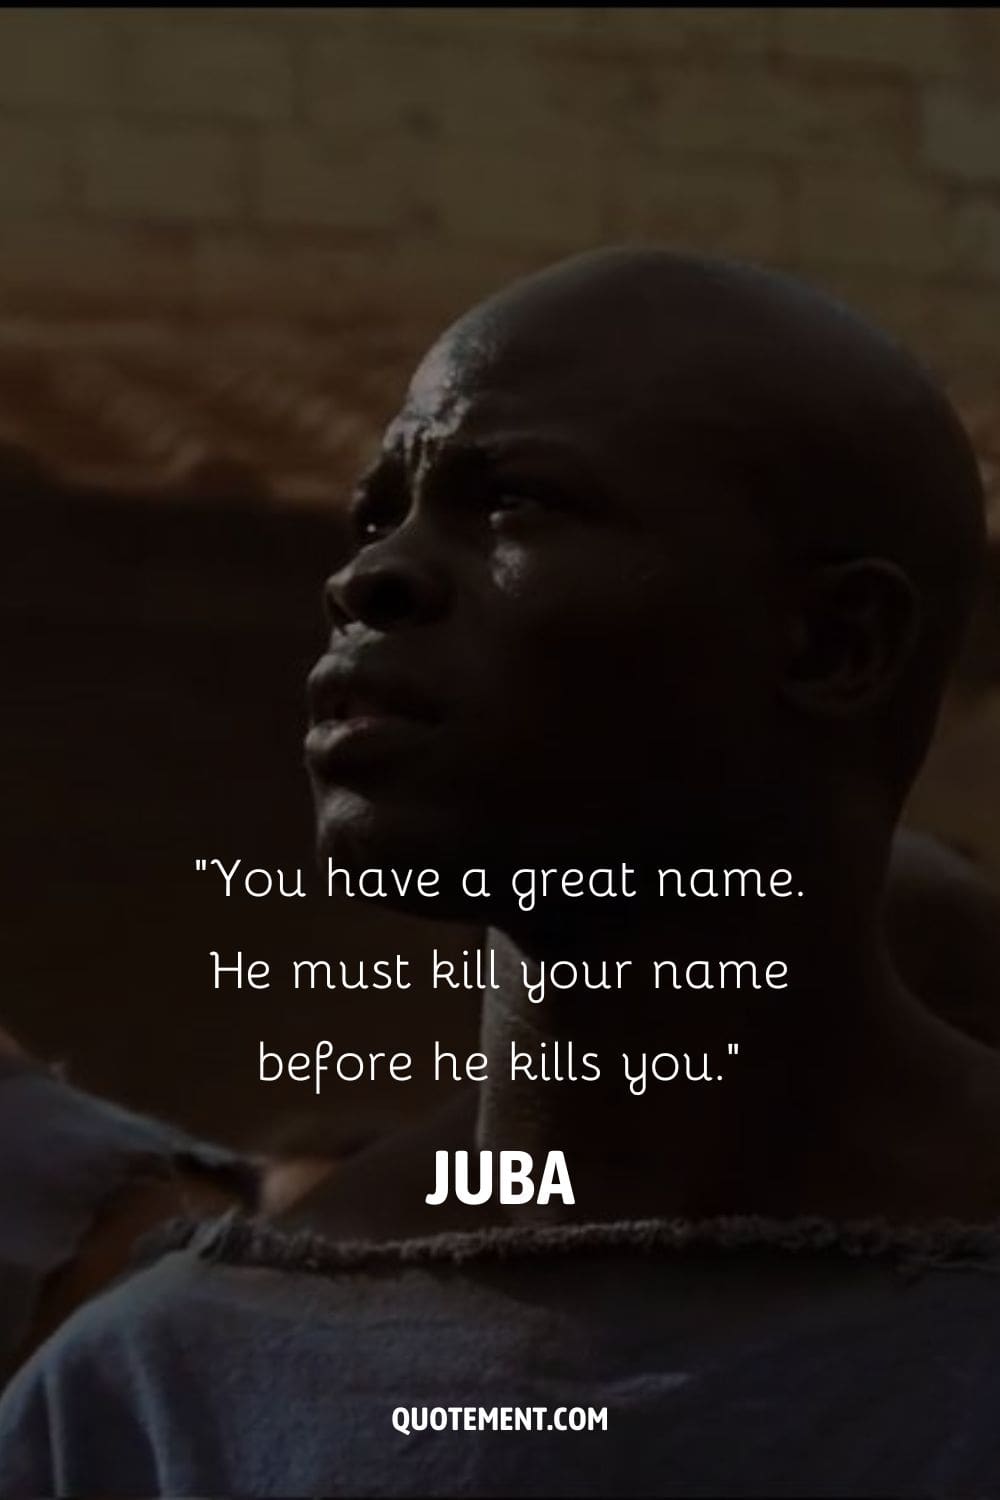 Image of Juba representing a Gladiator movie quote.